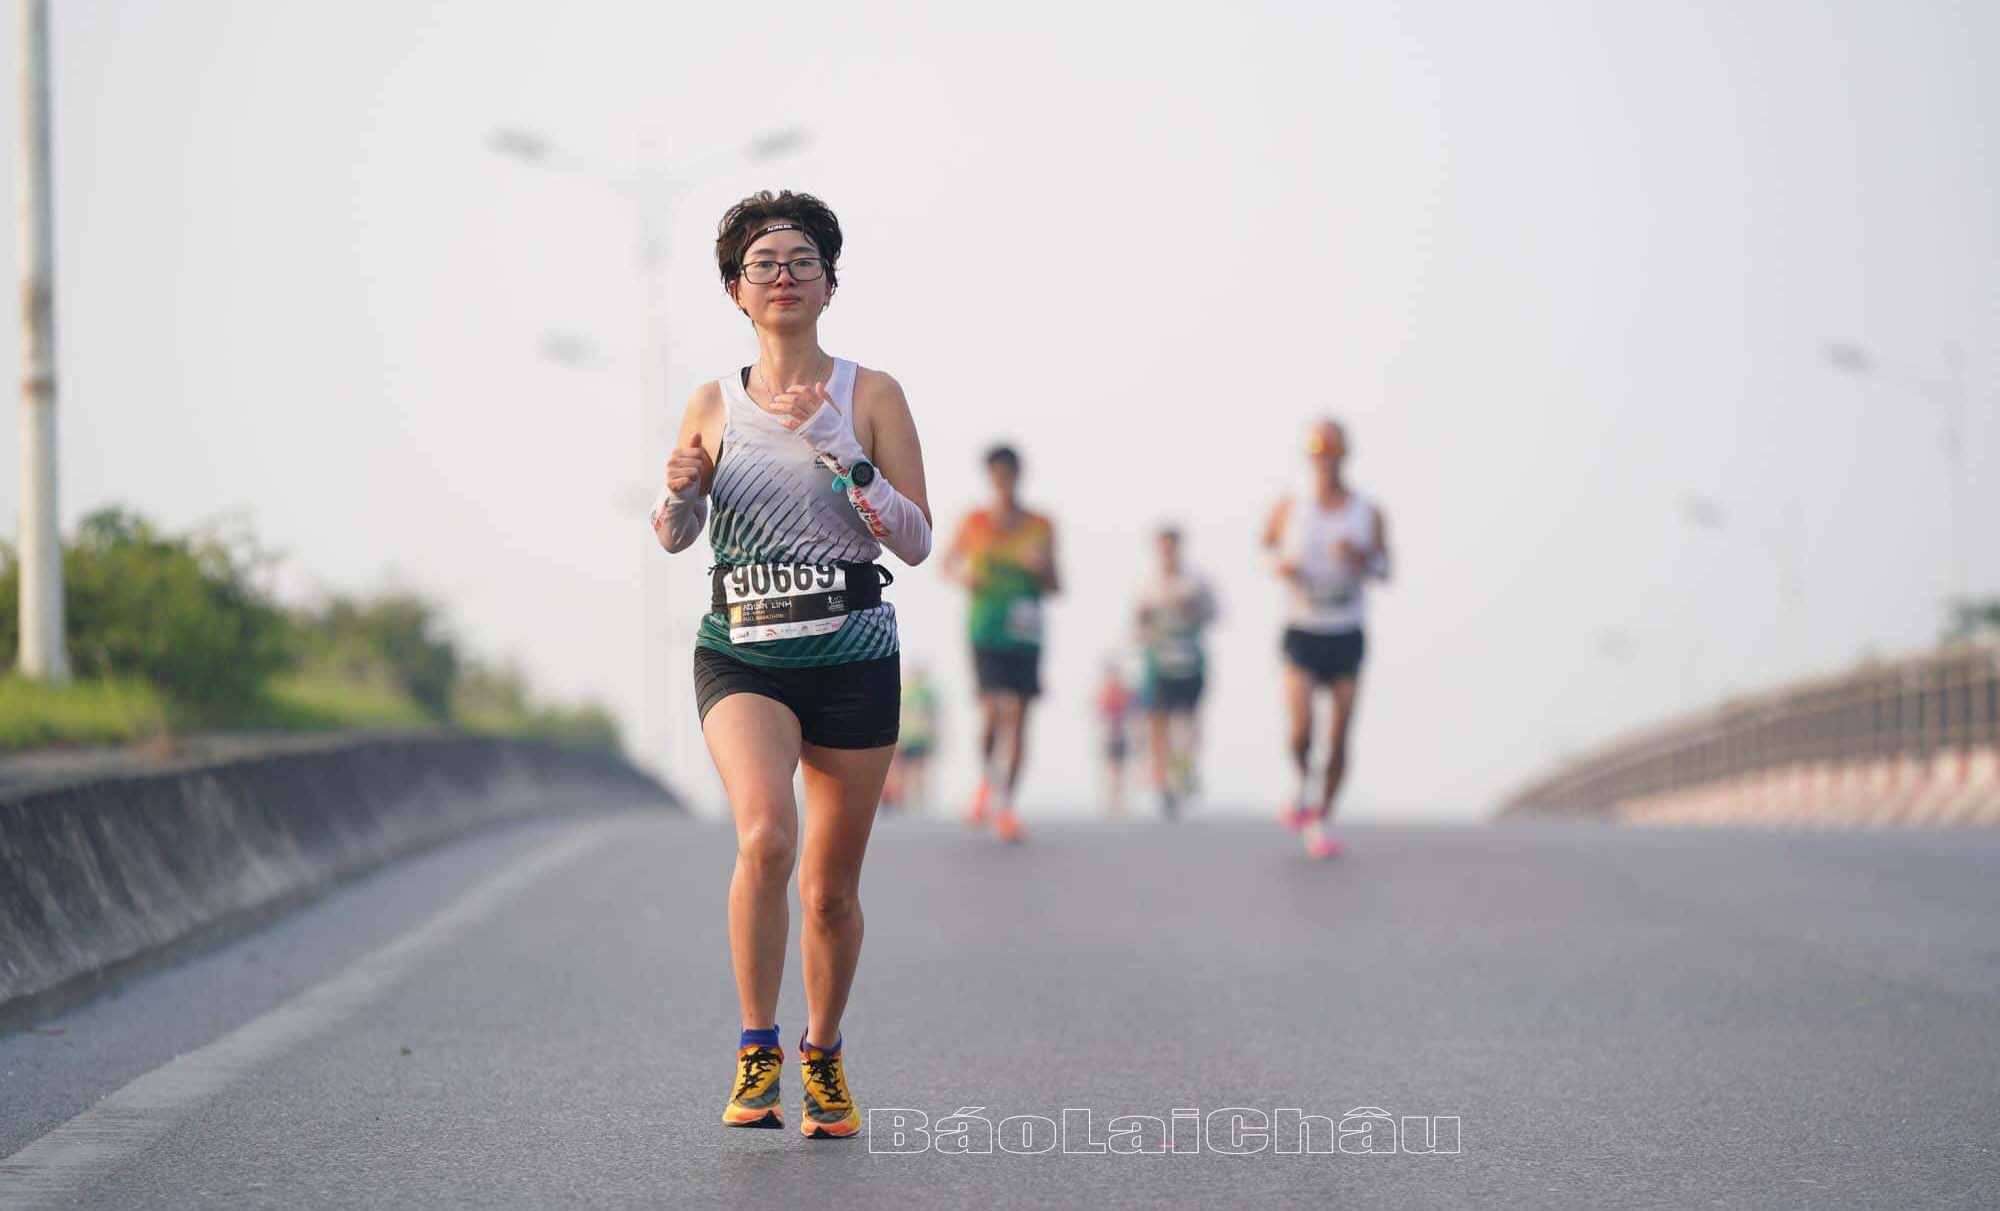 VĐV Lai Châu tham gia giải Longbien Marathon